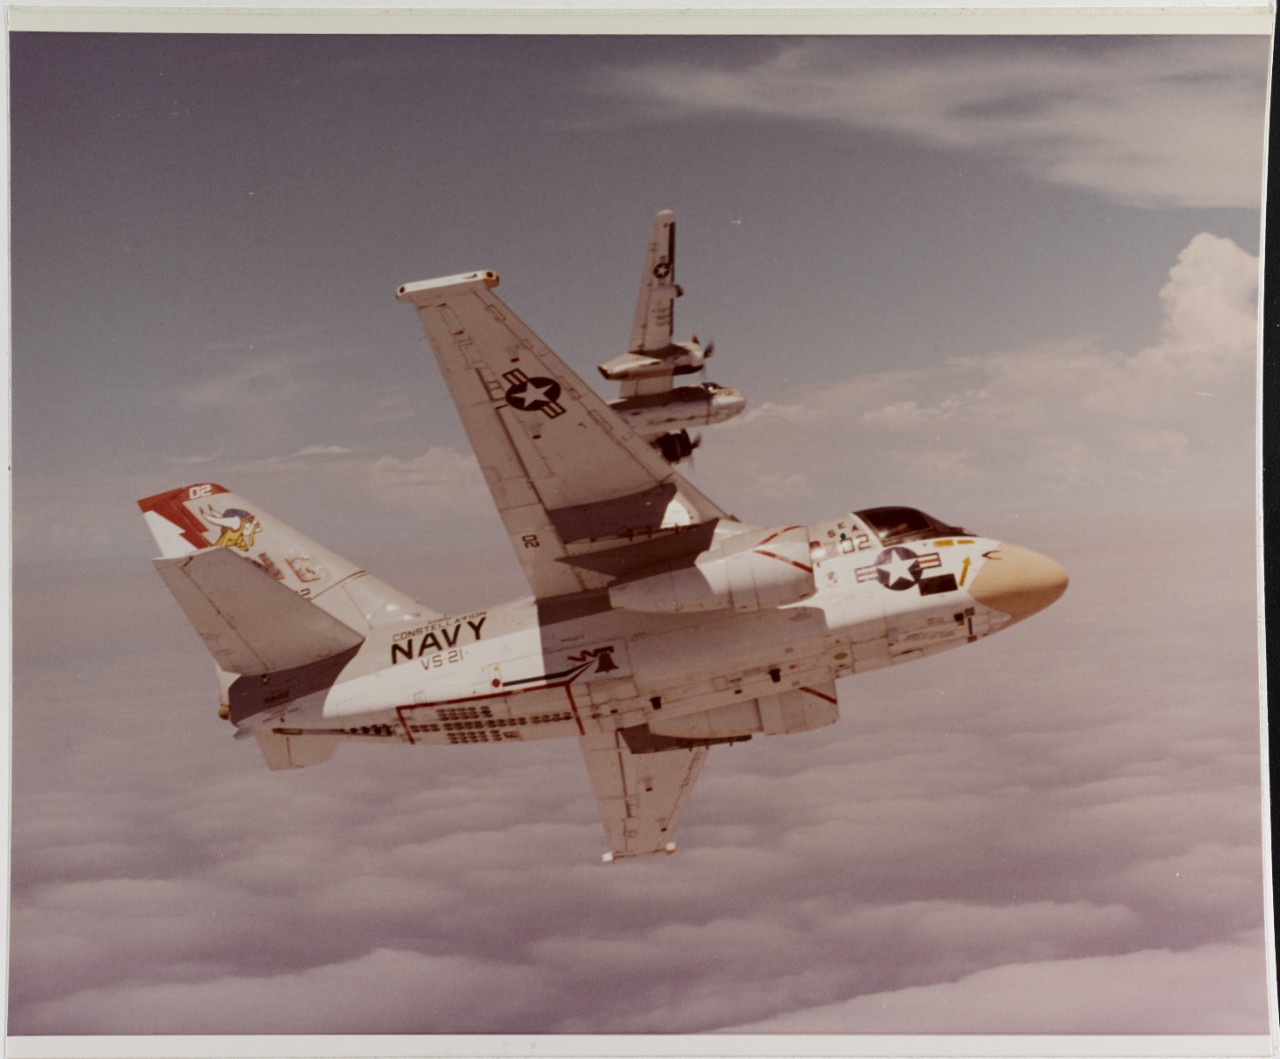 Grumman S-2G "Tracker" (BU no. 152374) of VS-37